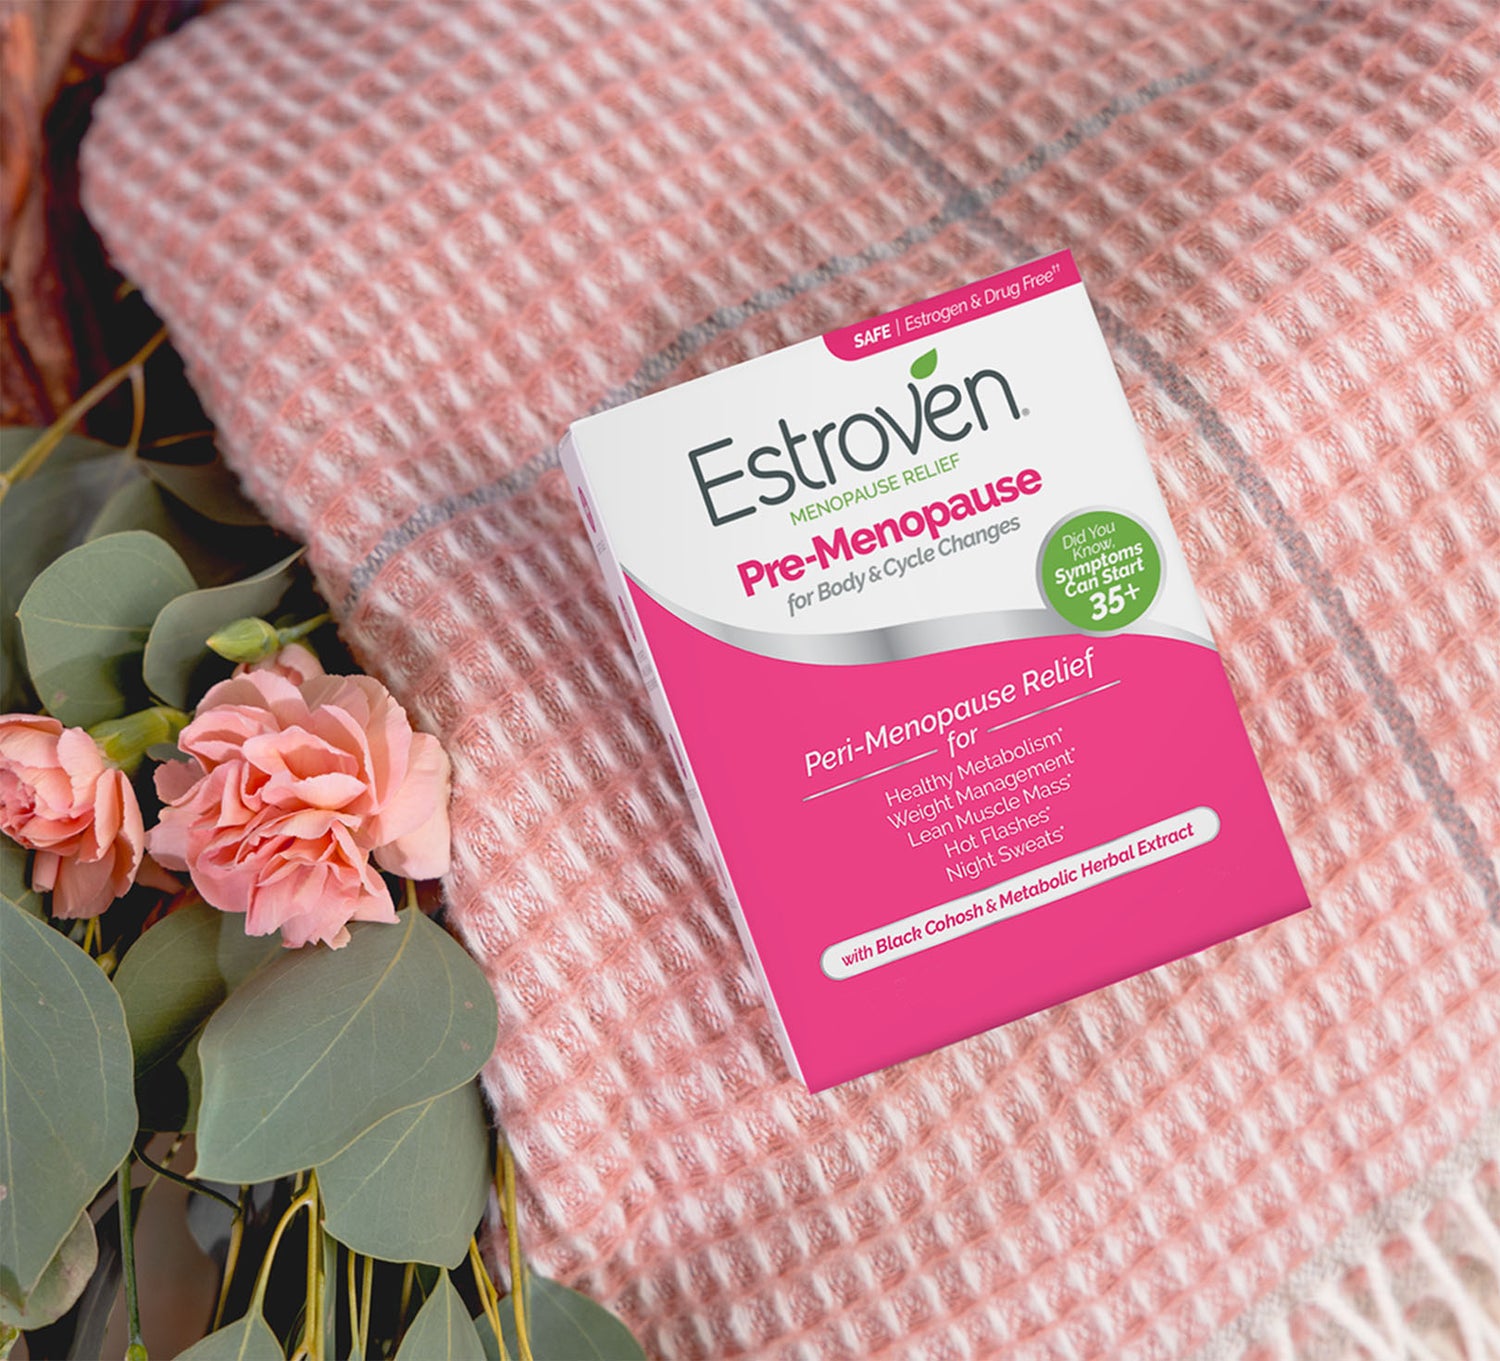 Estroven Pre-Menopause box on top of pink blanket